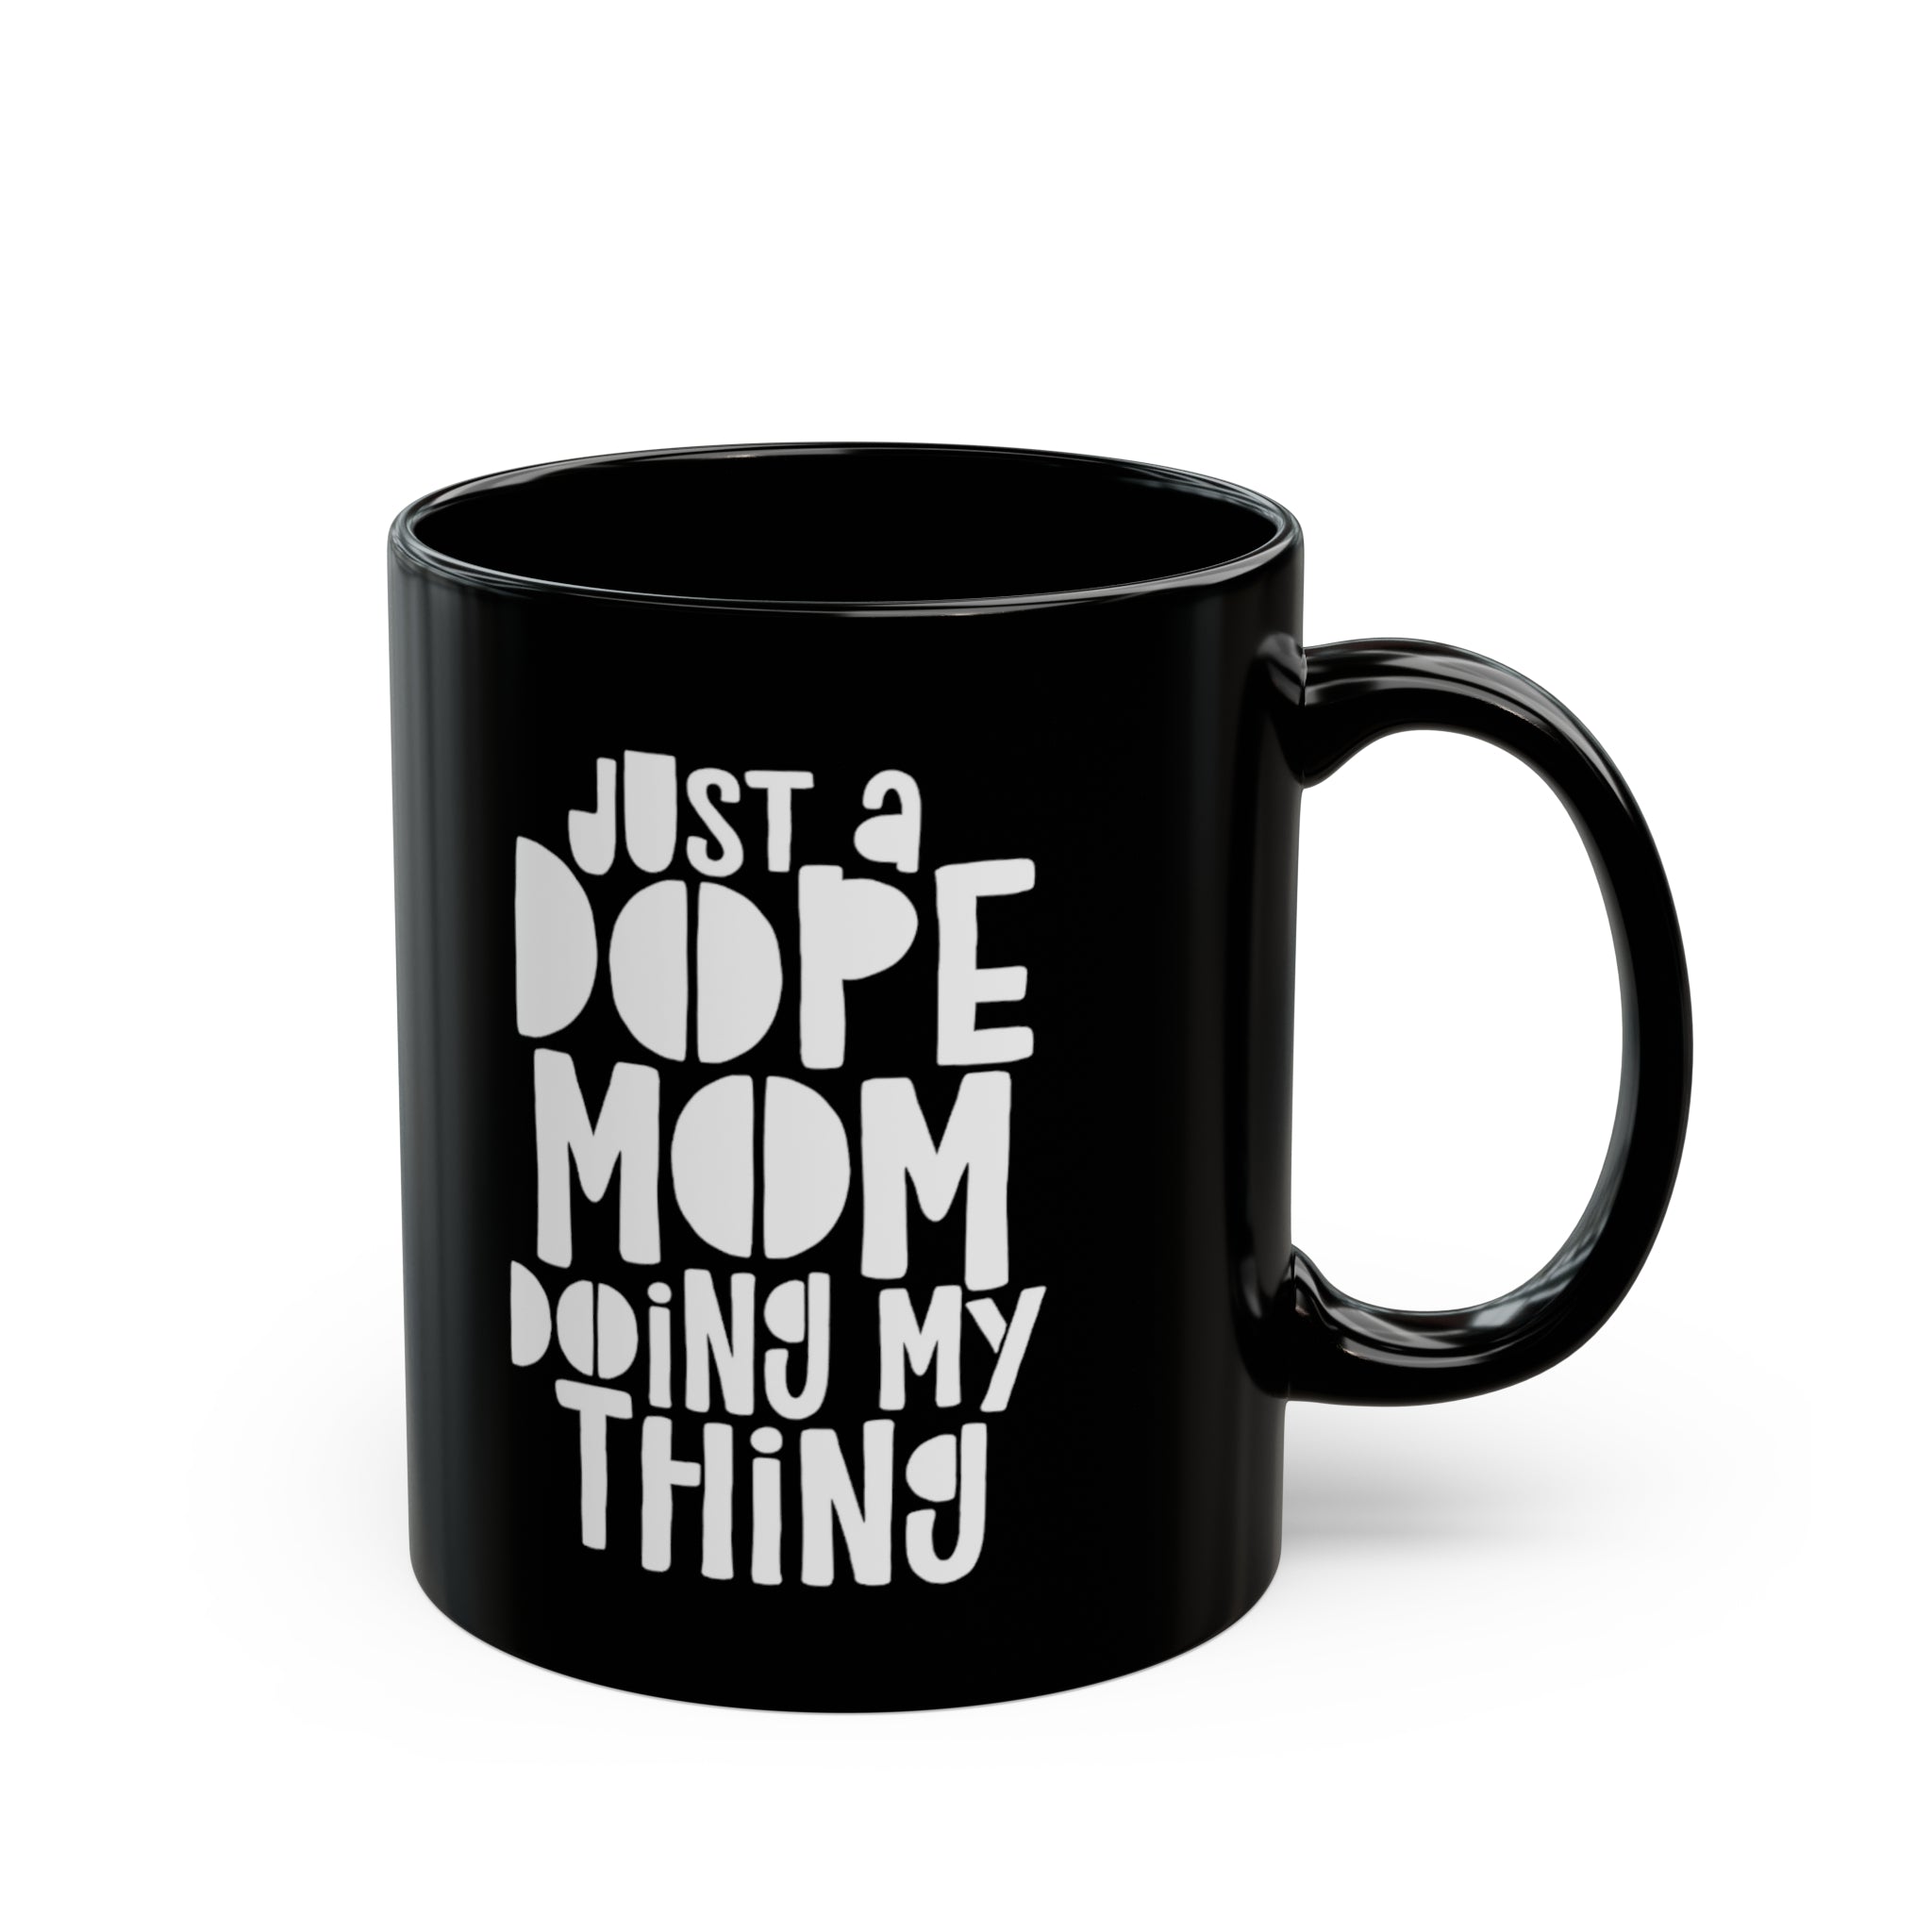 Just A Dope Mom Doing My Thing Mug 11oz